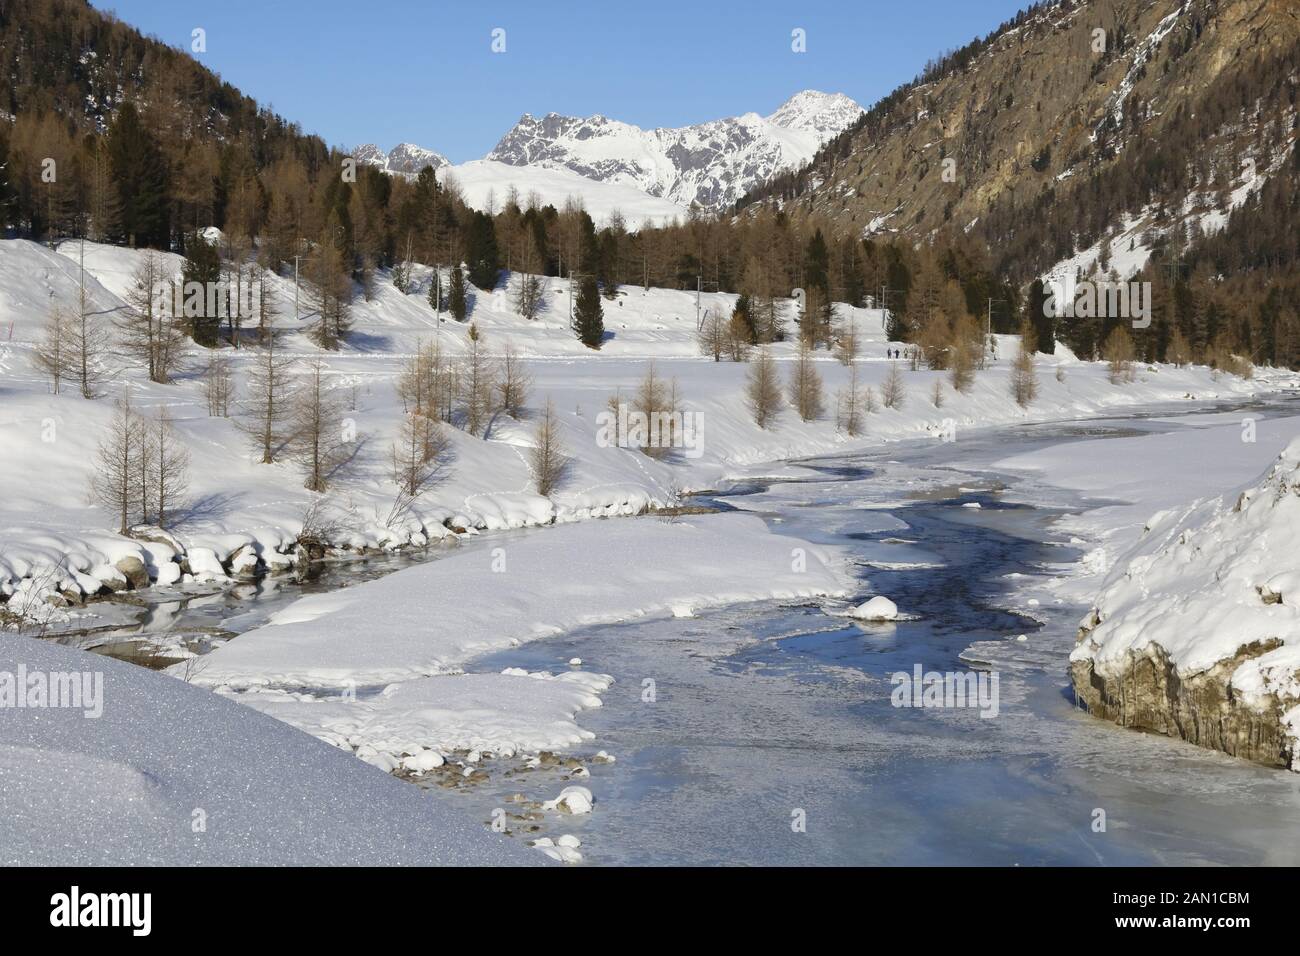 Winterzauber im Val Bernina, Ova da Bernina. Stock Photo